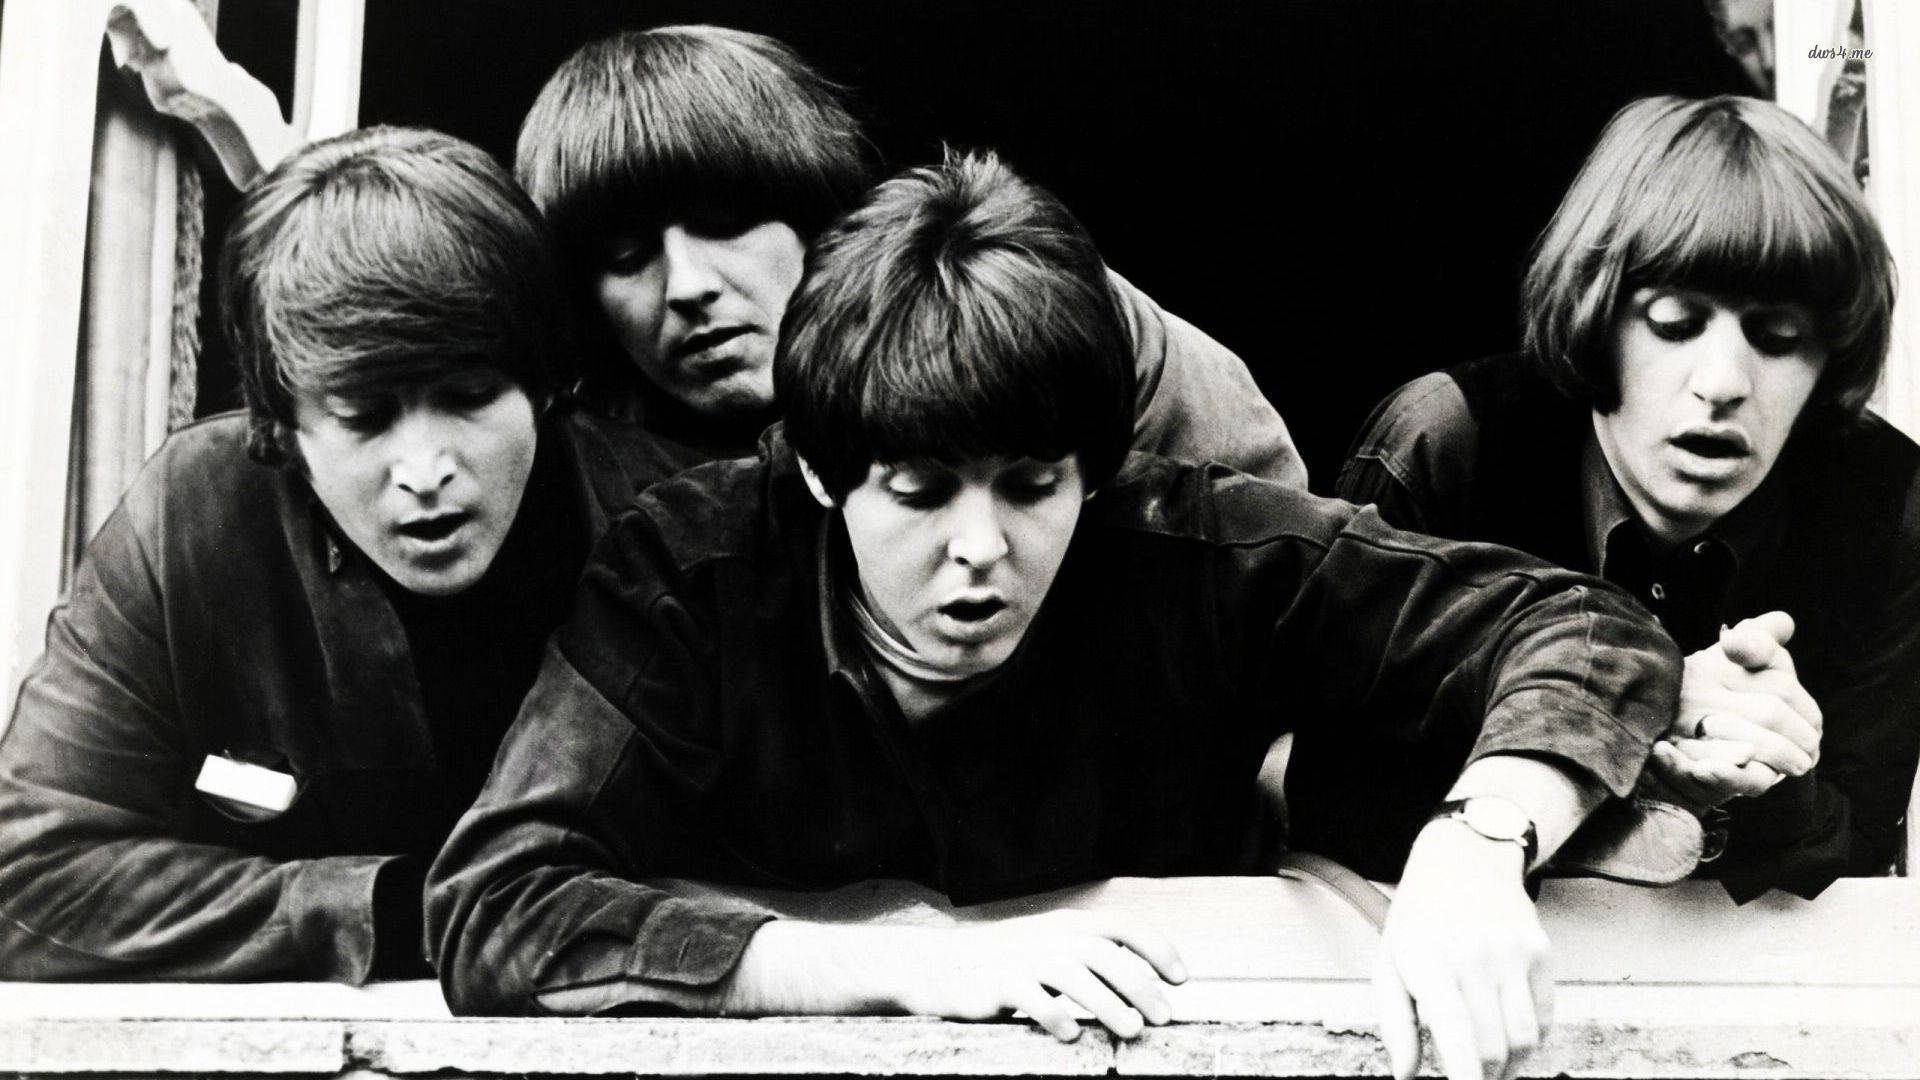 Free Beatles Wallpaper Downloads, [100+] Beatles Wallpapers for FREE |  